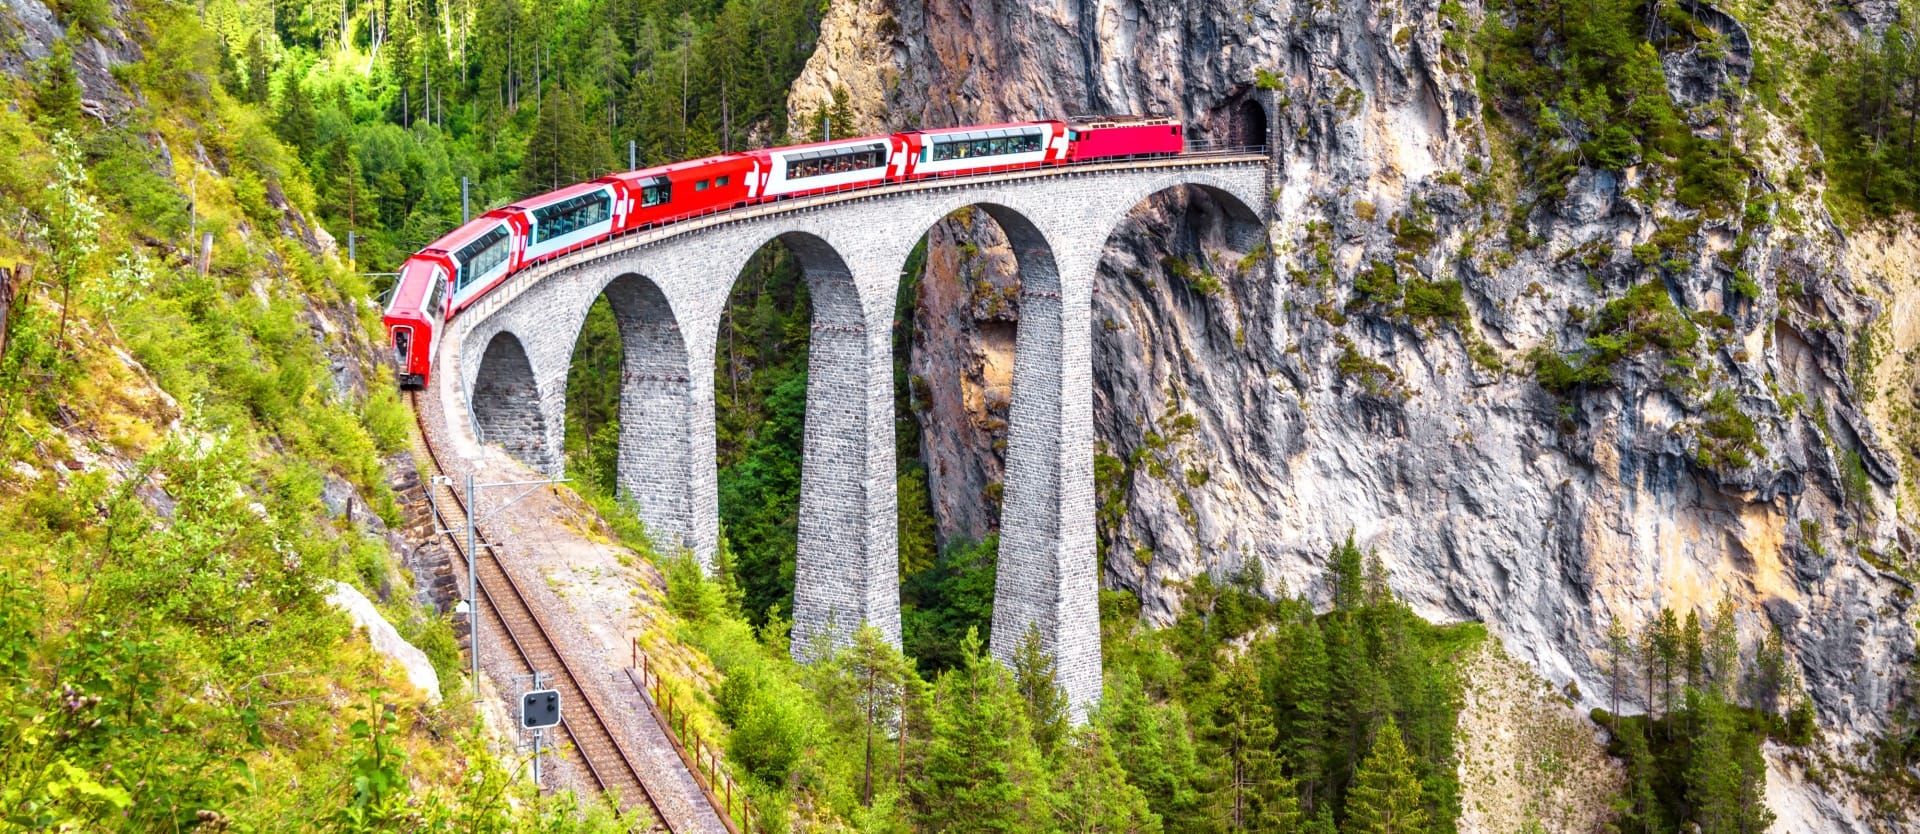 Bernina express on Landwasser Viaduct, Switzerland. It is landmark of Swiss Alps. Nice Alpine landscape in summer. Red glacier train on rail